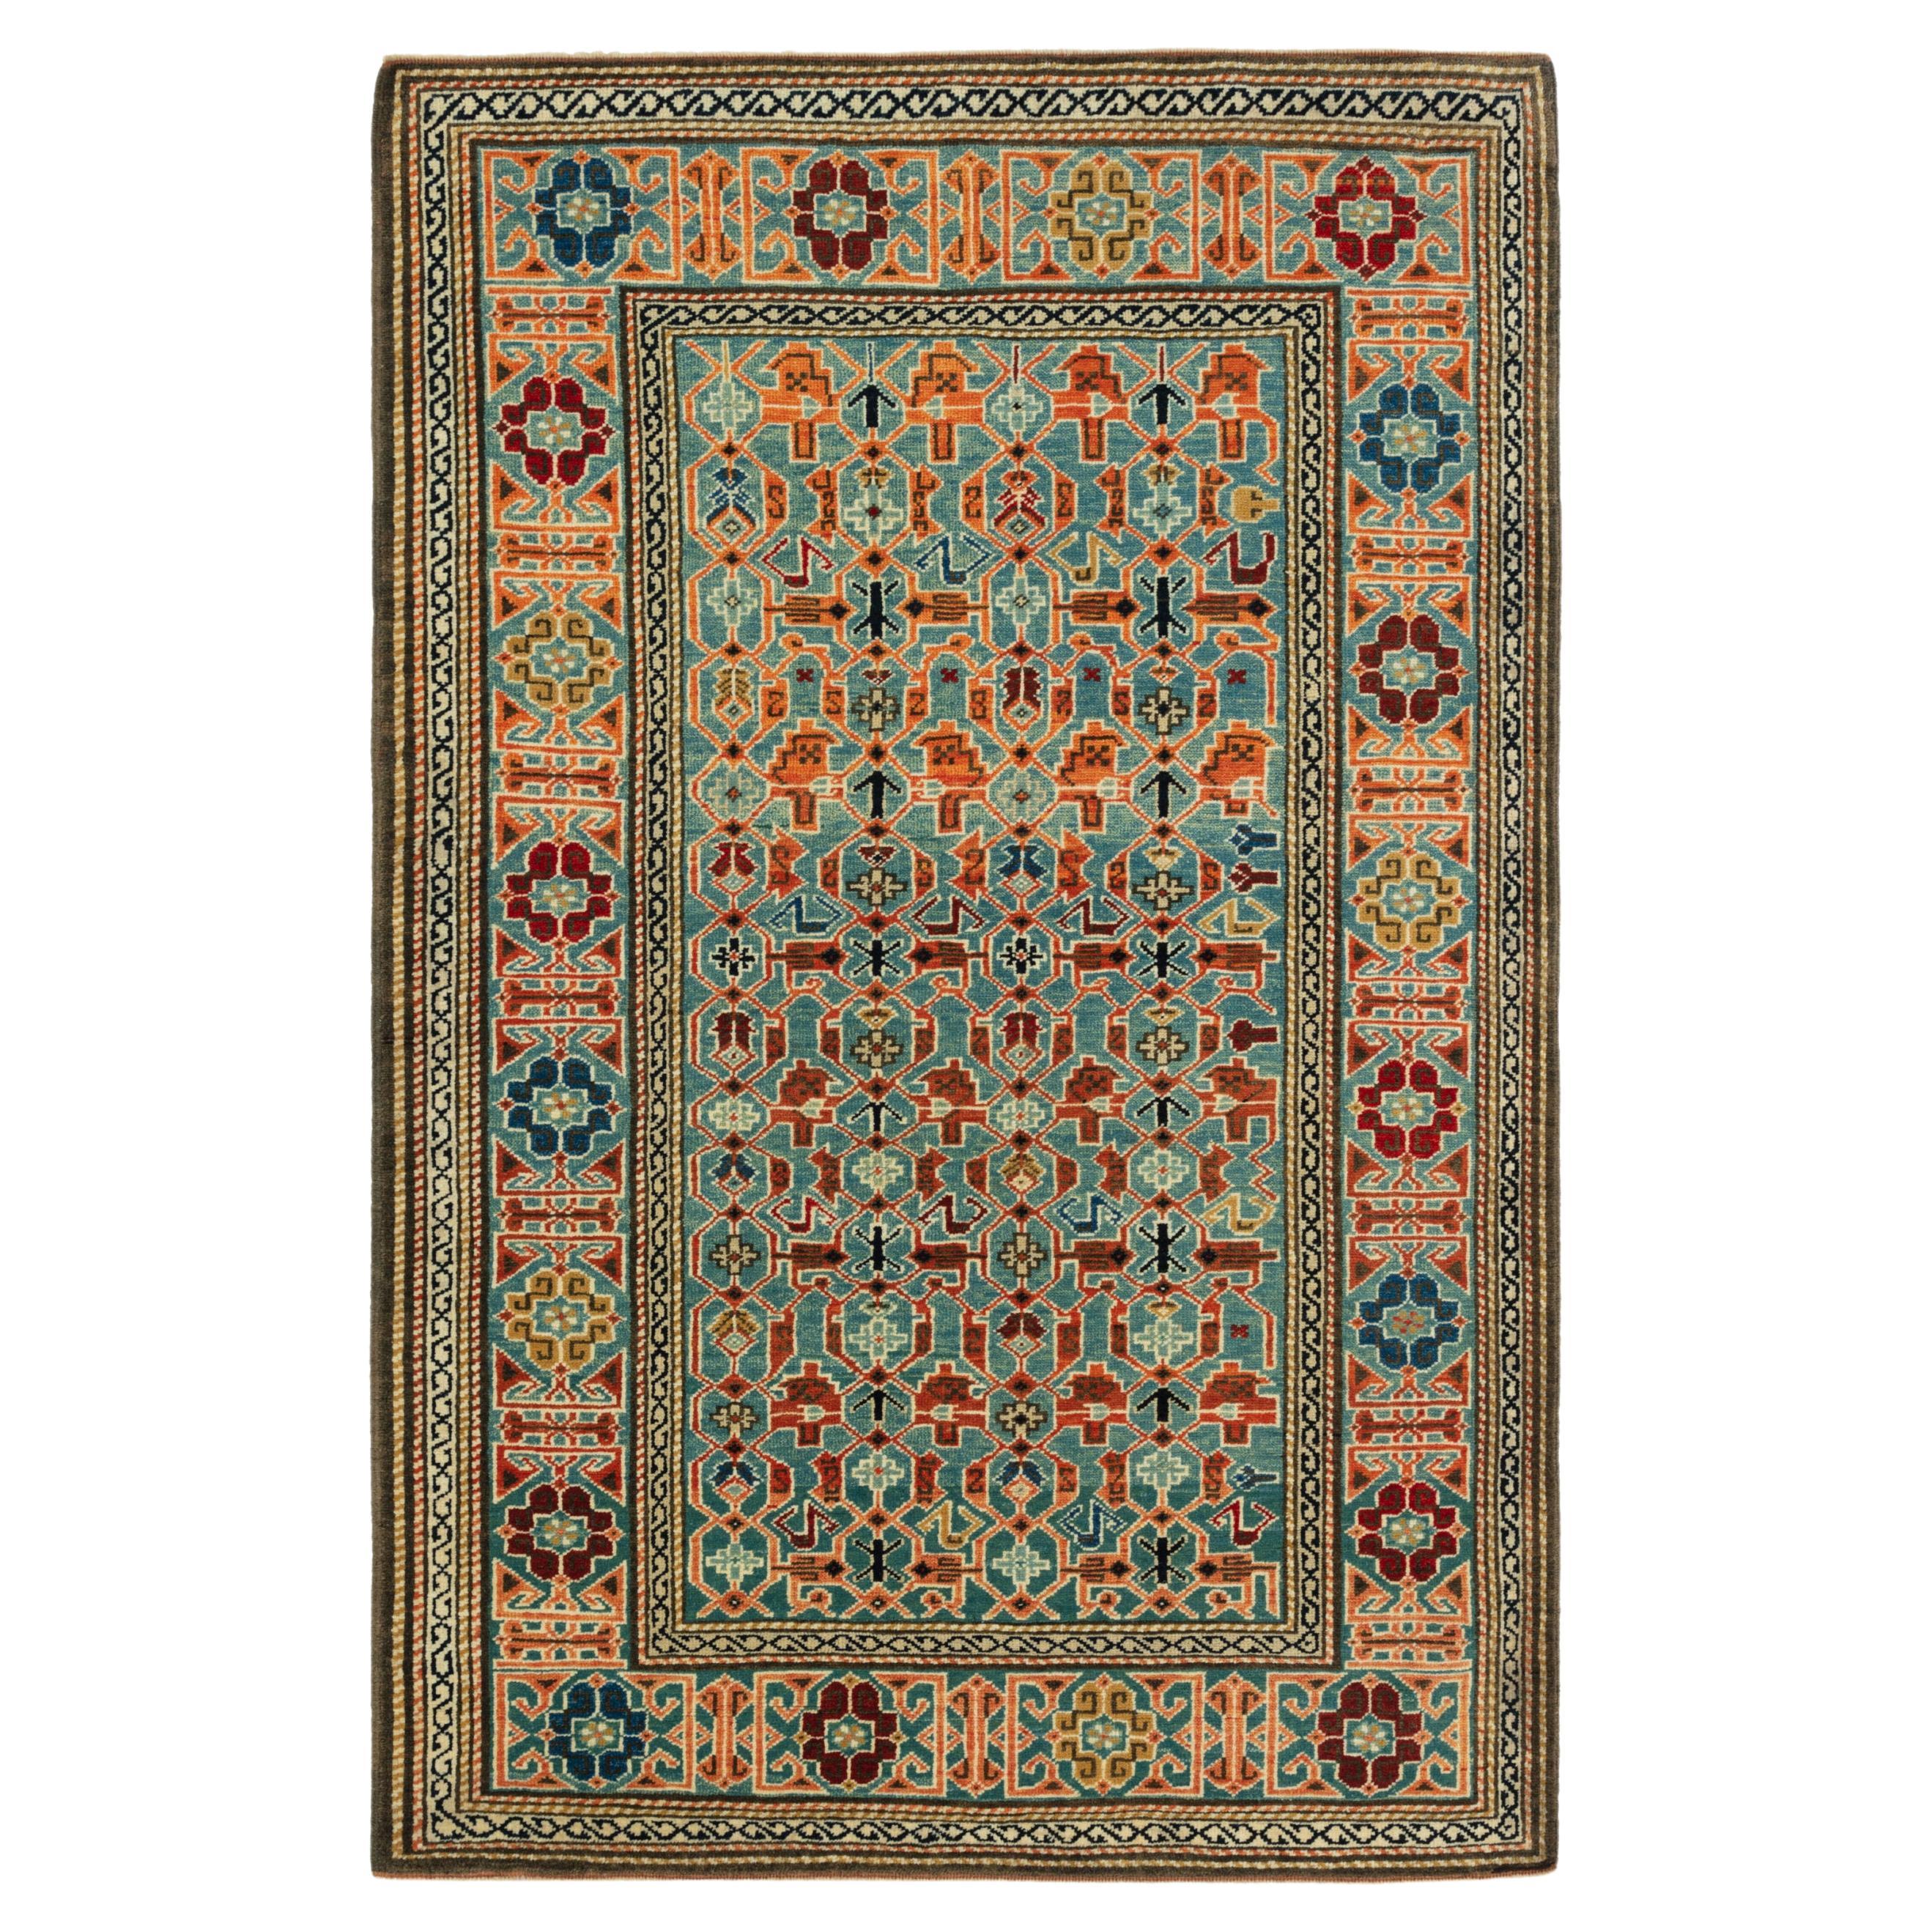 Ararat Rugs Konagkend Shirvan Rug, Antique Caucasian Revival Carpet Natural Dyed